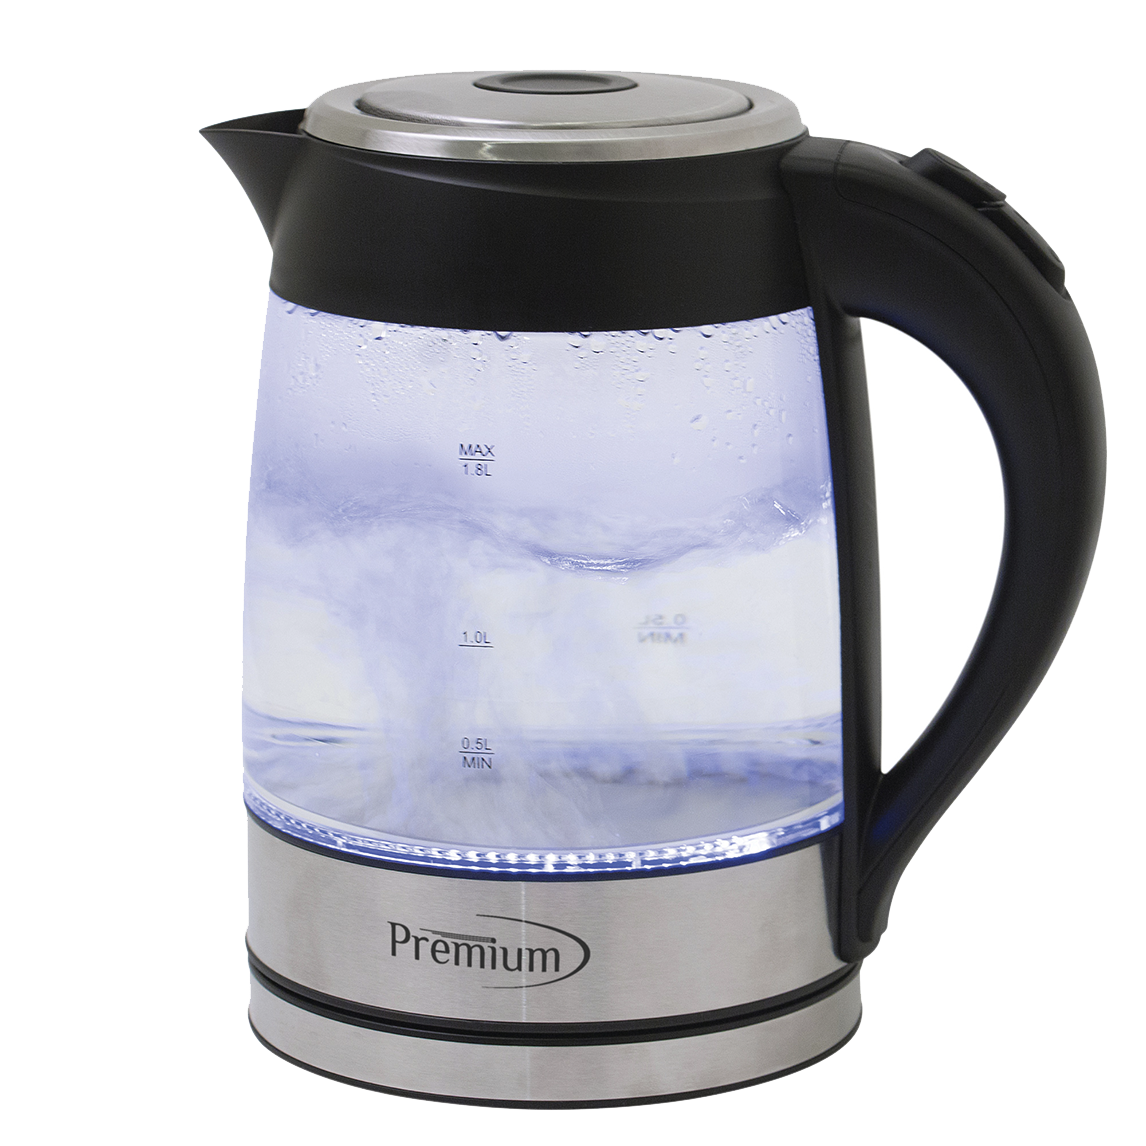 Premium - 1500W 1.8 L Glass Electric Tea Kettle Blue LED light Boil-dry protection